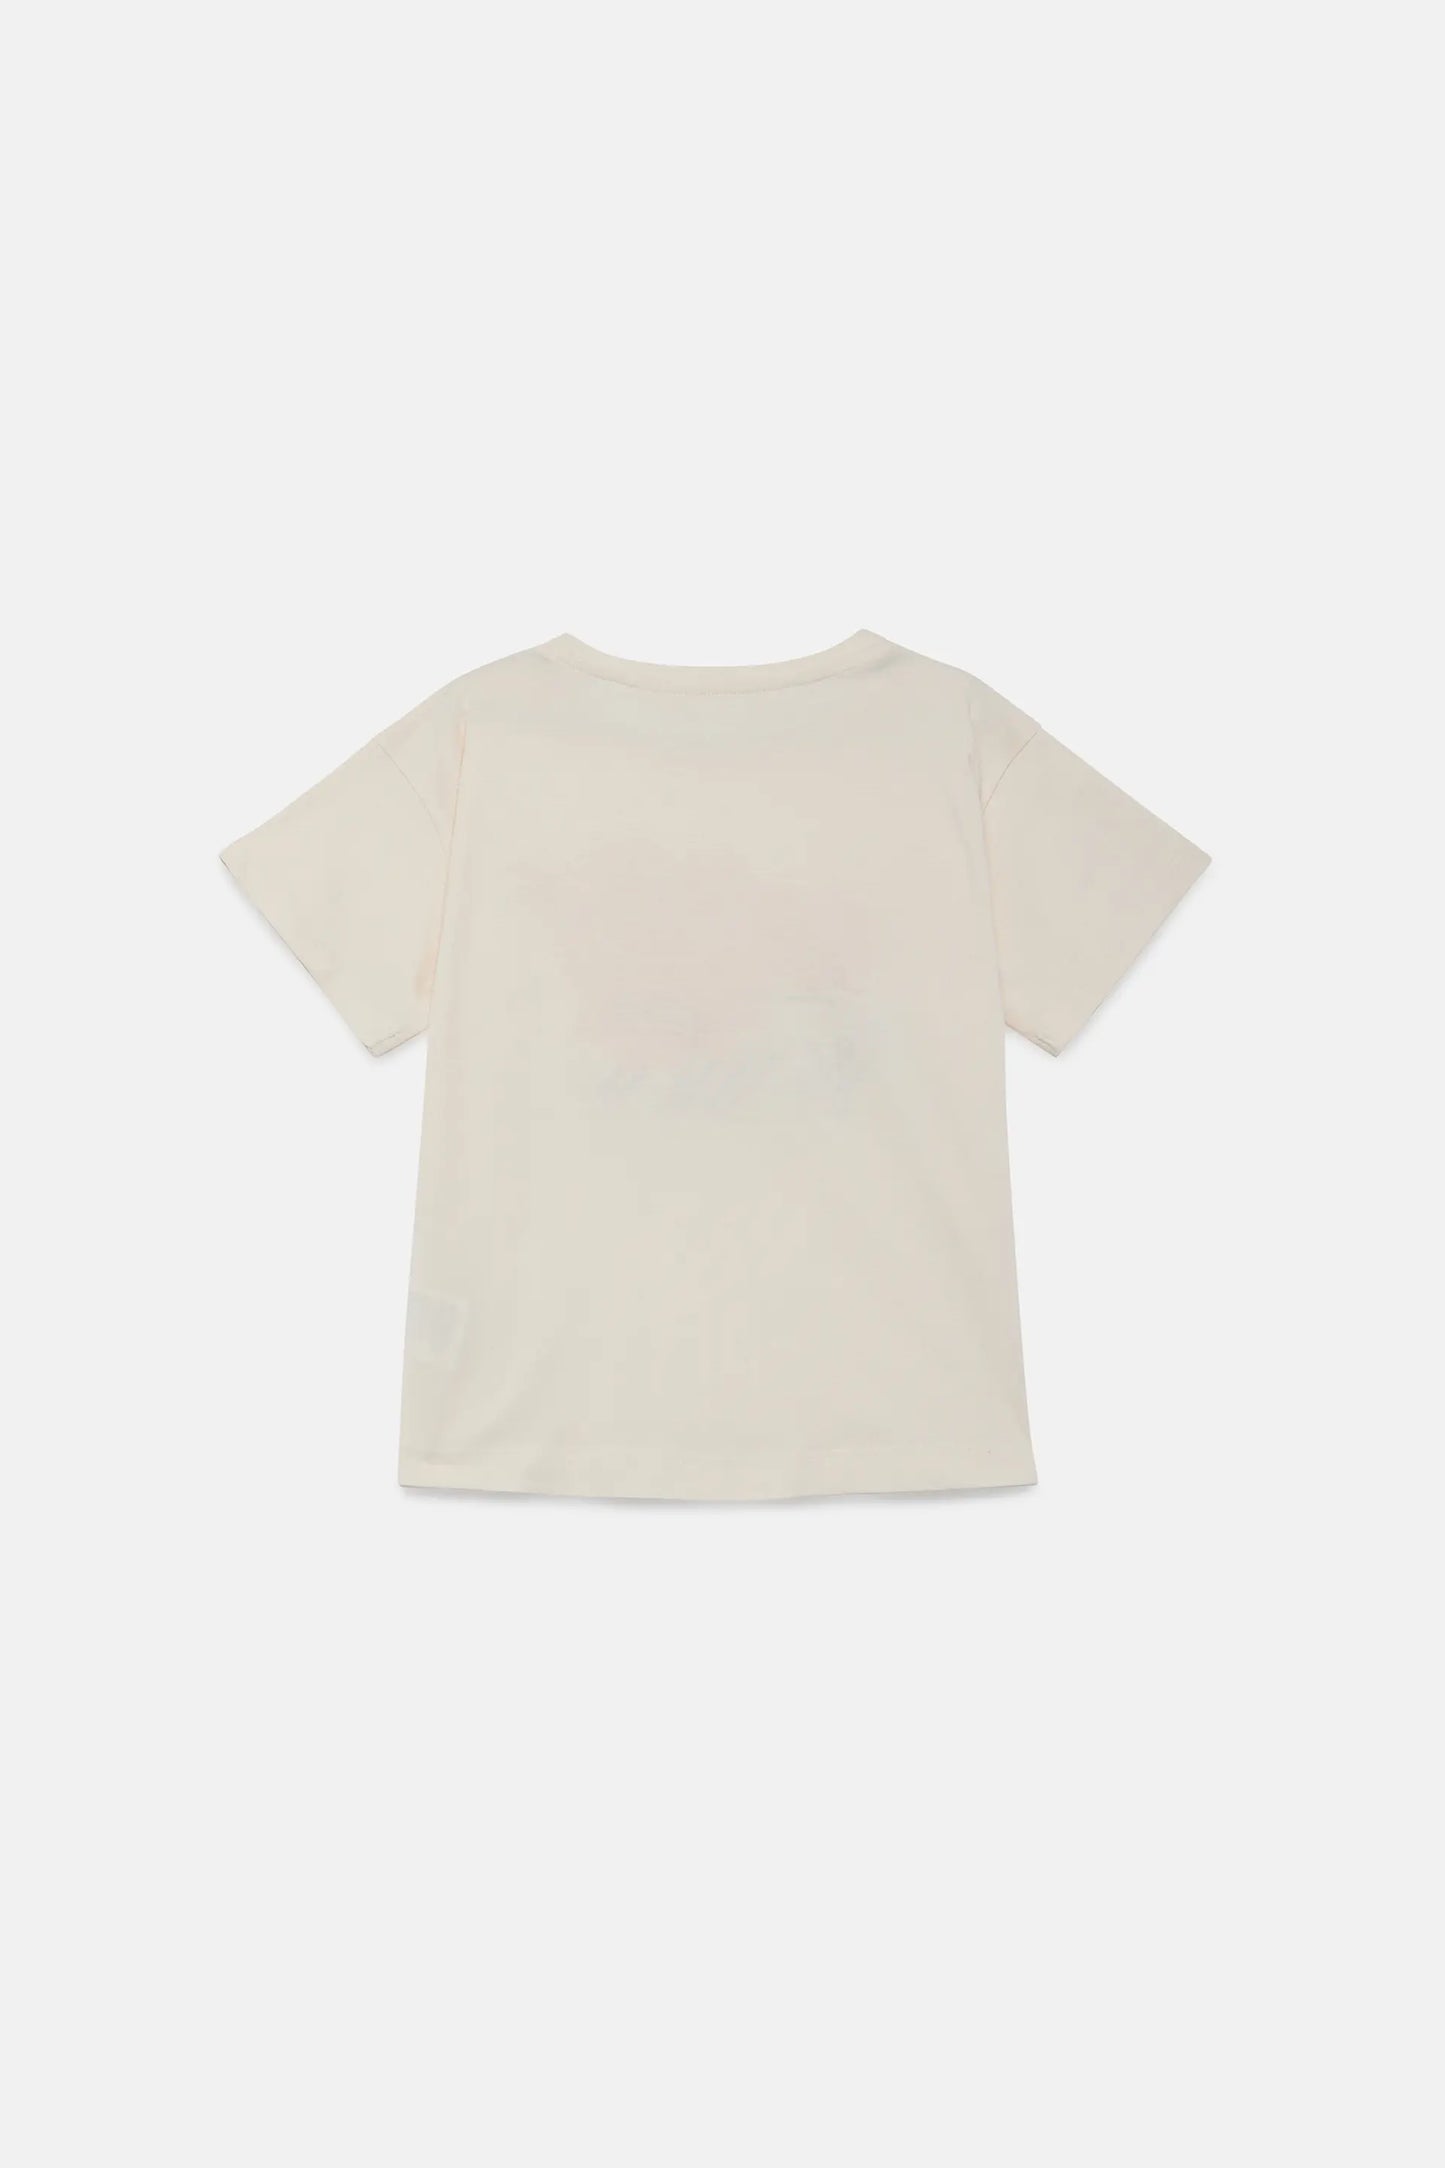 White animal print unisex t-shirt